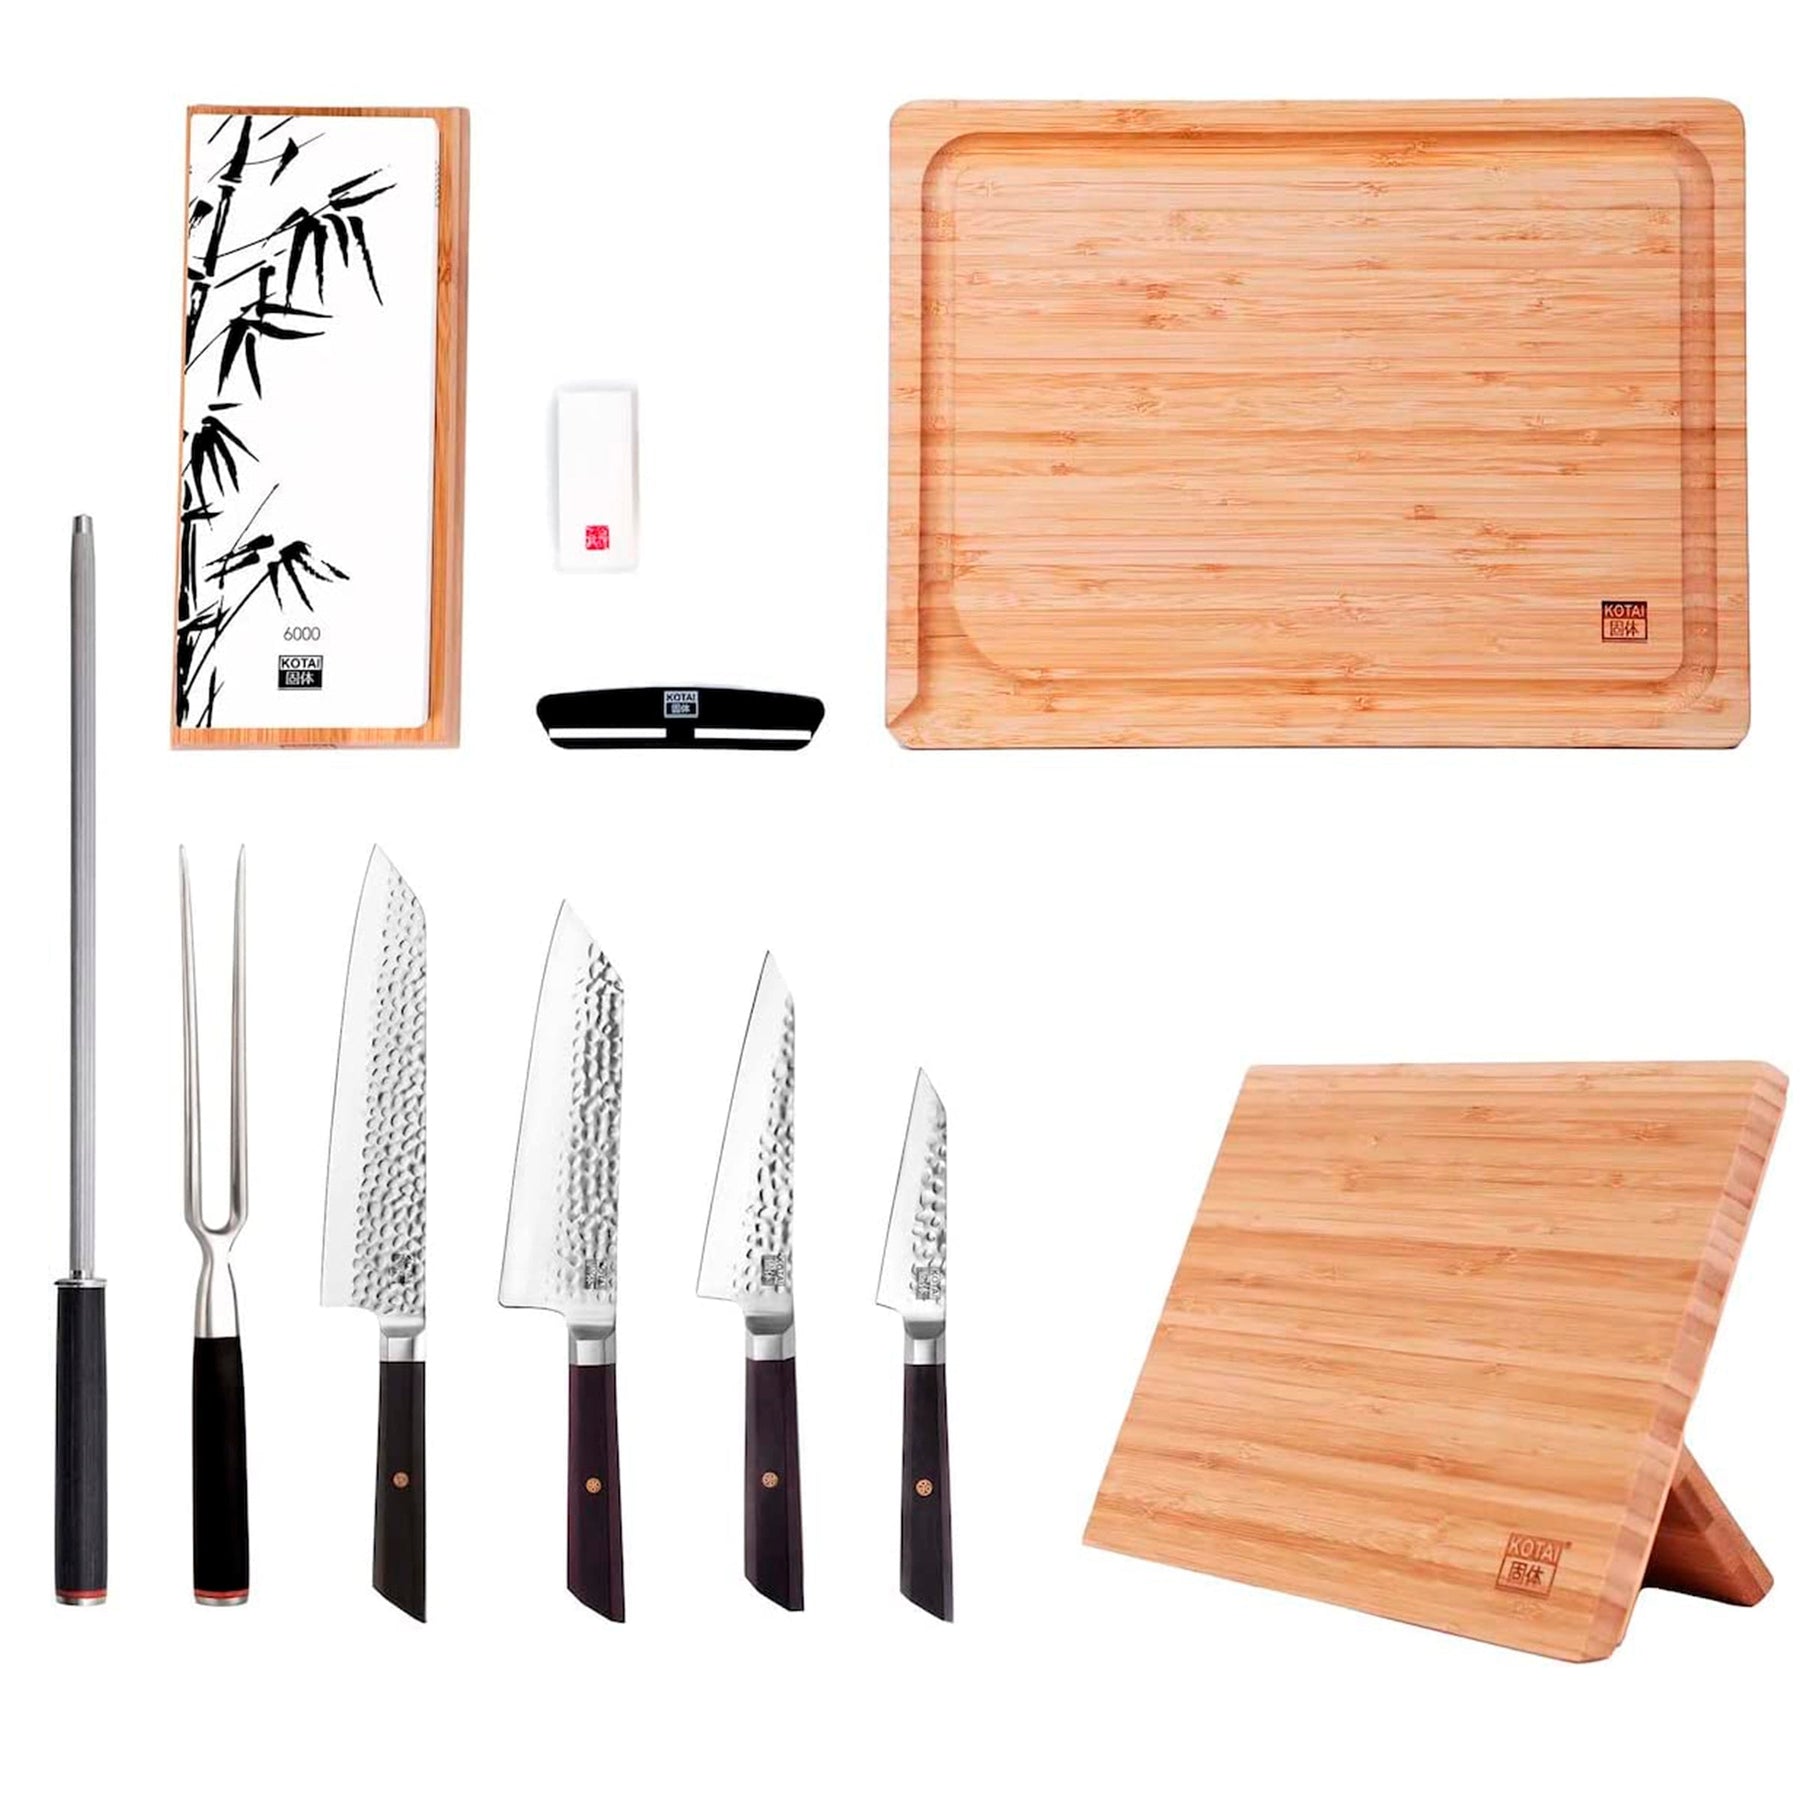 KOTAI Complete 6-Piece Knife Set - Pakka Collection